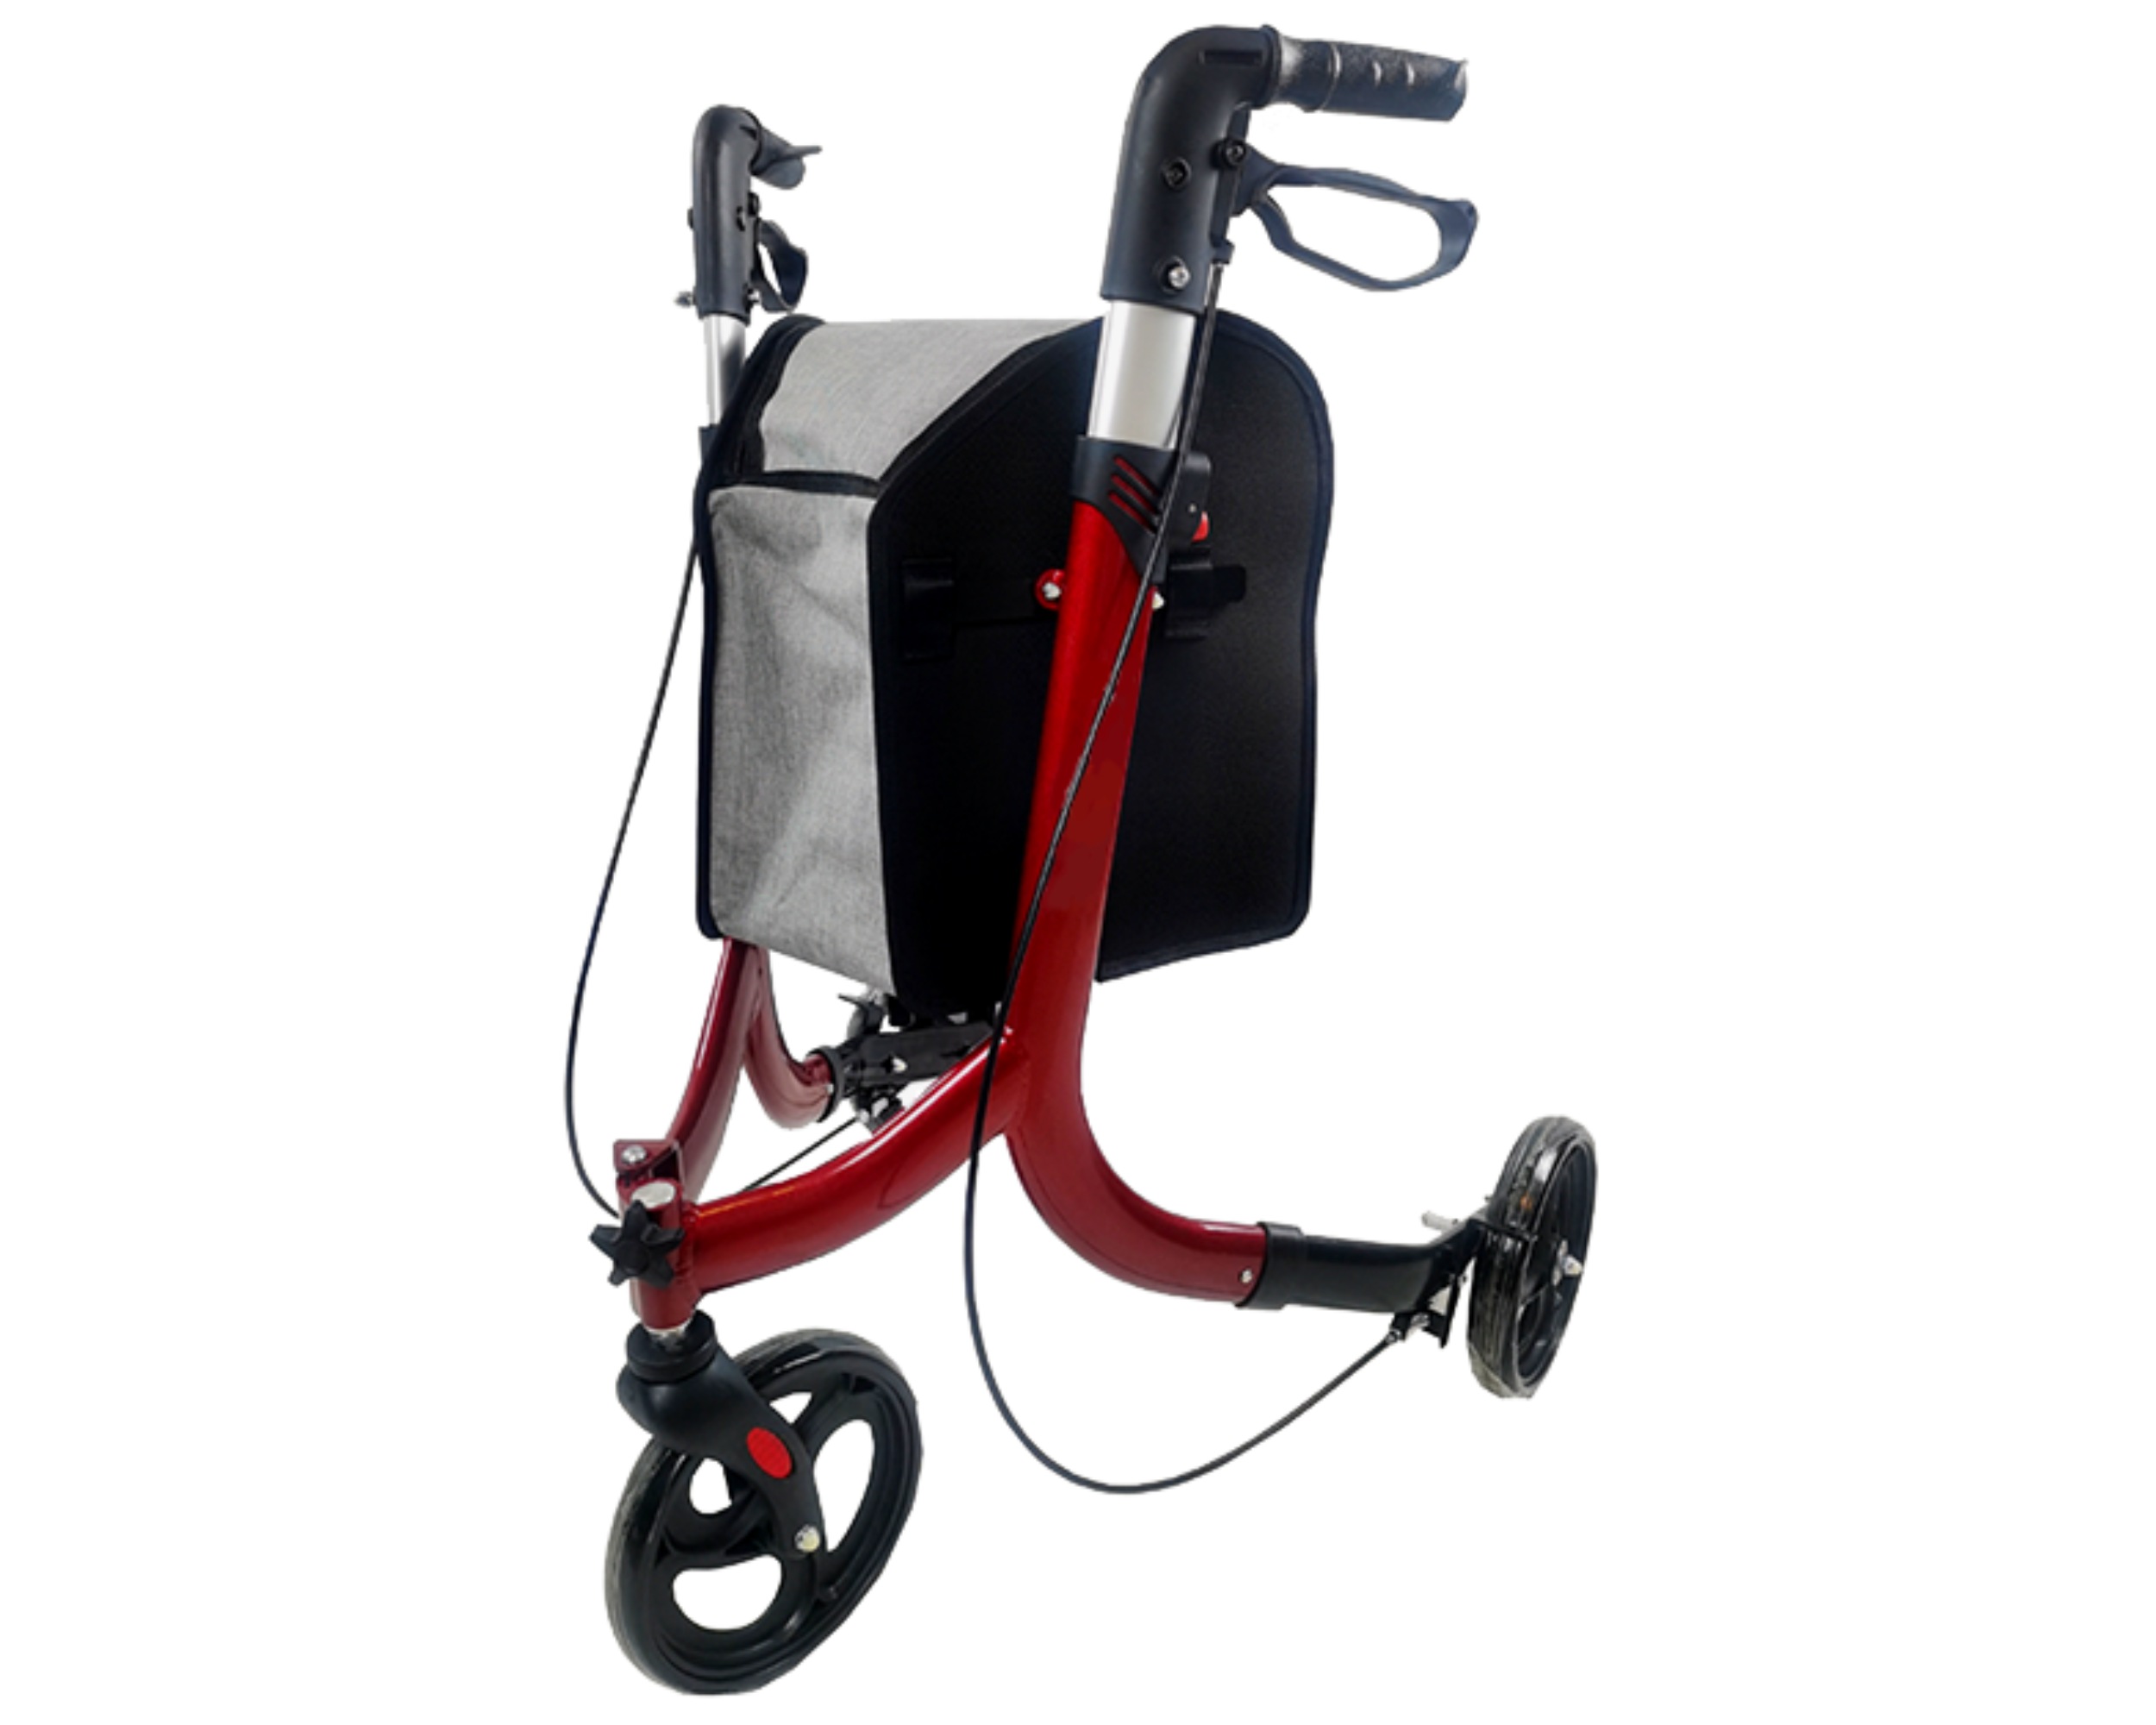 LEMUR podpórka inwalidzka trójkołowa (3-wheel rollator)